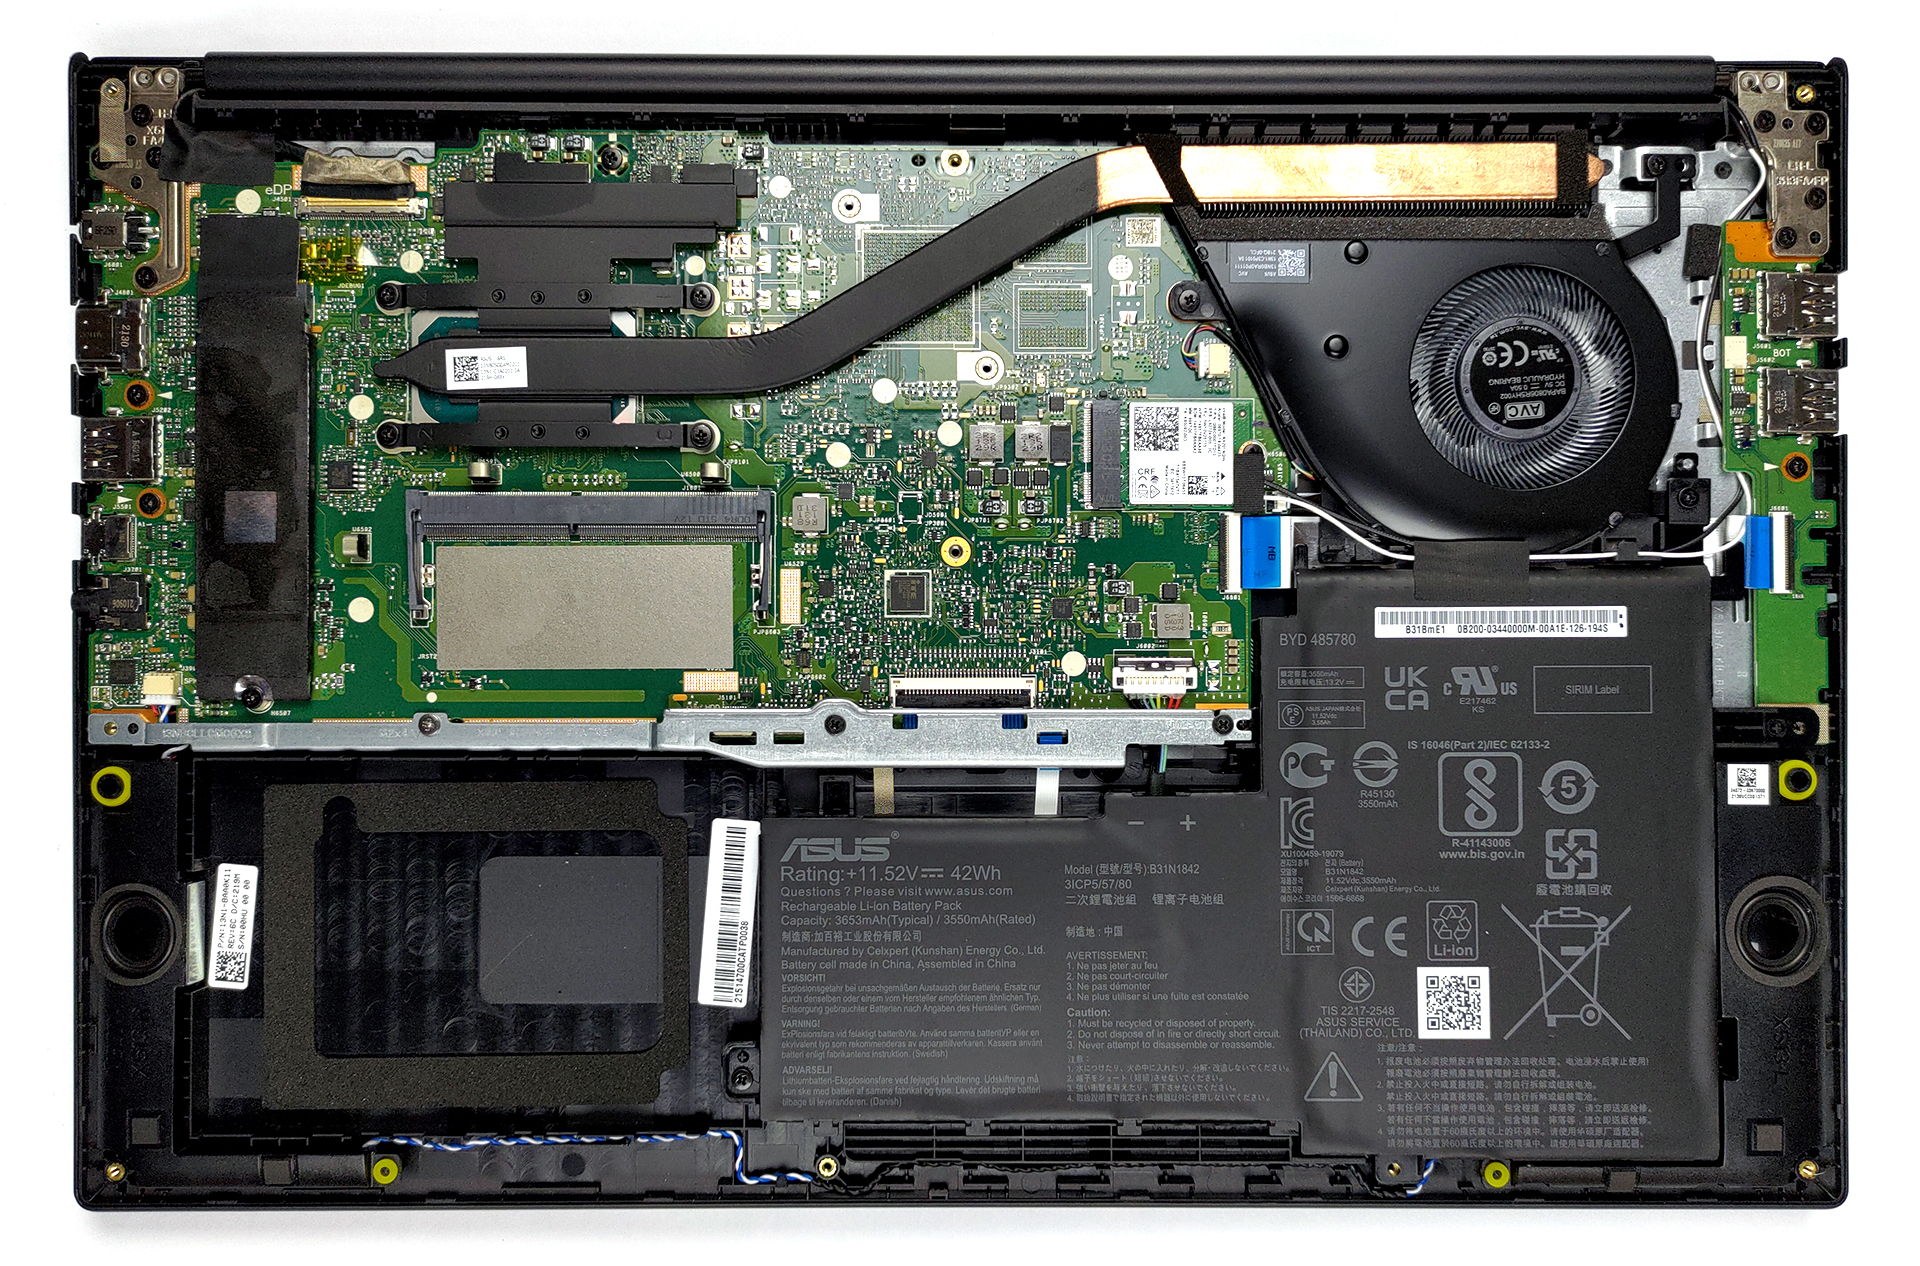 ASUS Vivobook 15 OLED K513 - i5-1135G7 · Xe Graphics G7 80 EU · 15.6”, FHD  (1920 x 1080), OLED · 512GB SSD · 2x 8GB DDR4 · Windows 10 Home